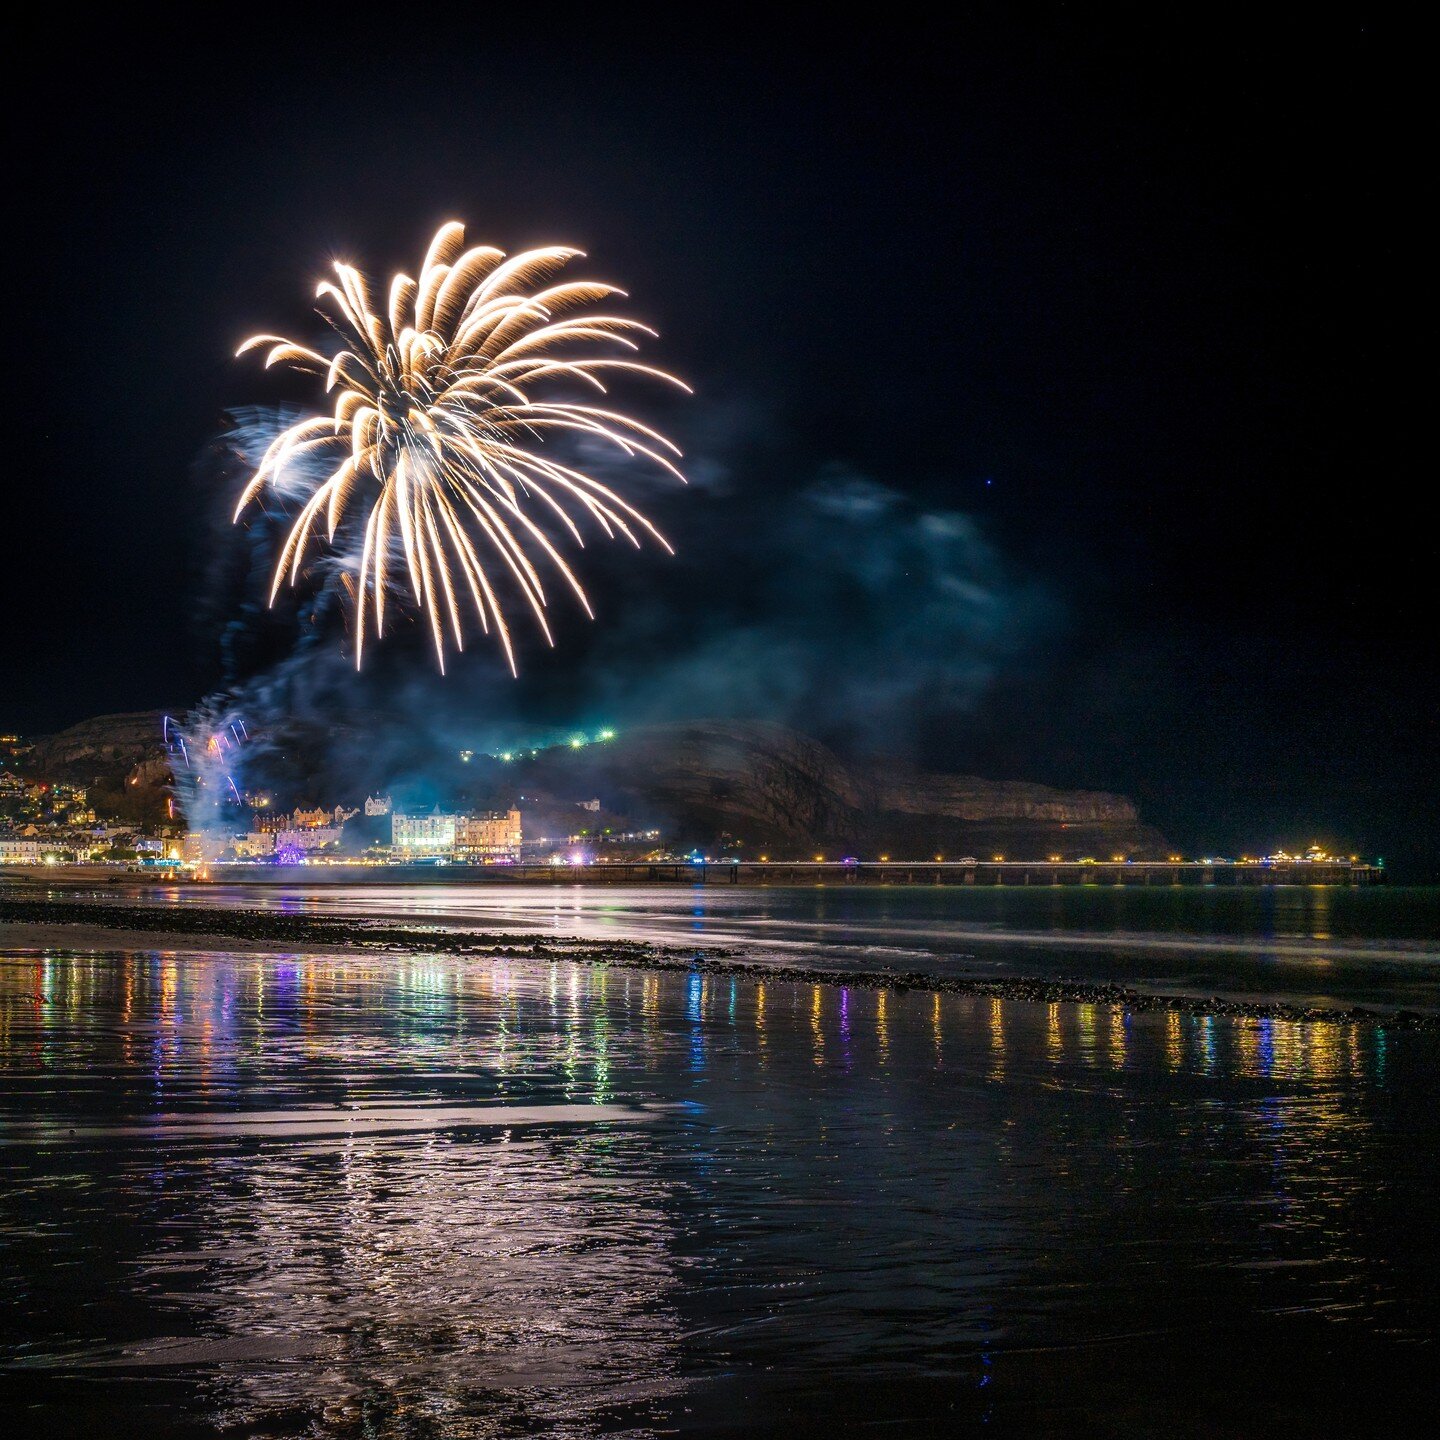 A magnificent firework display once again this year on Llandudno promenade!
-
-
-
-
-
-
-
#fireworks 
#northwales 
#northwalestagram 
#northwalescoast 
#northwalesinstagram 
#llandudno 
#llandudnobeach 
#llandudnopier 
#sonya7iii 
#tamron2875 
#firew